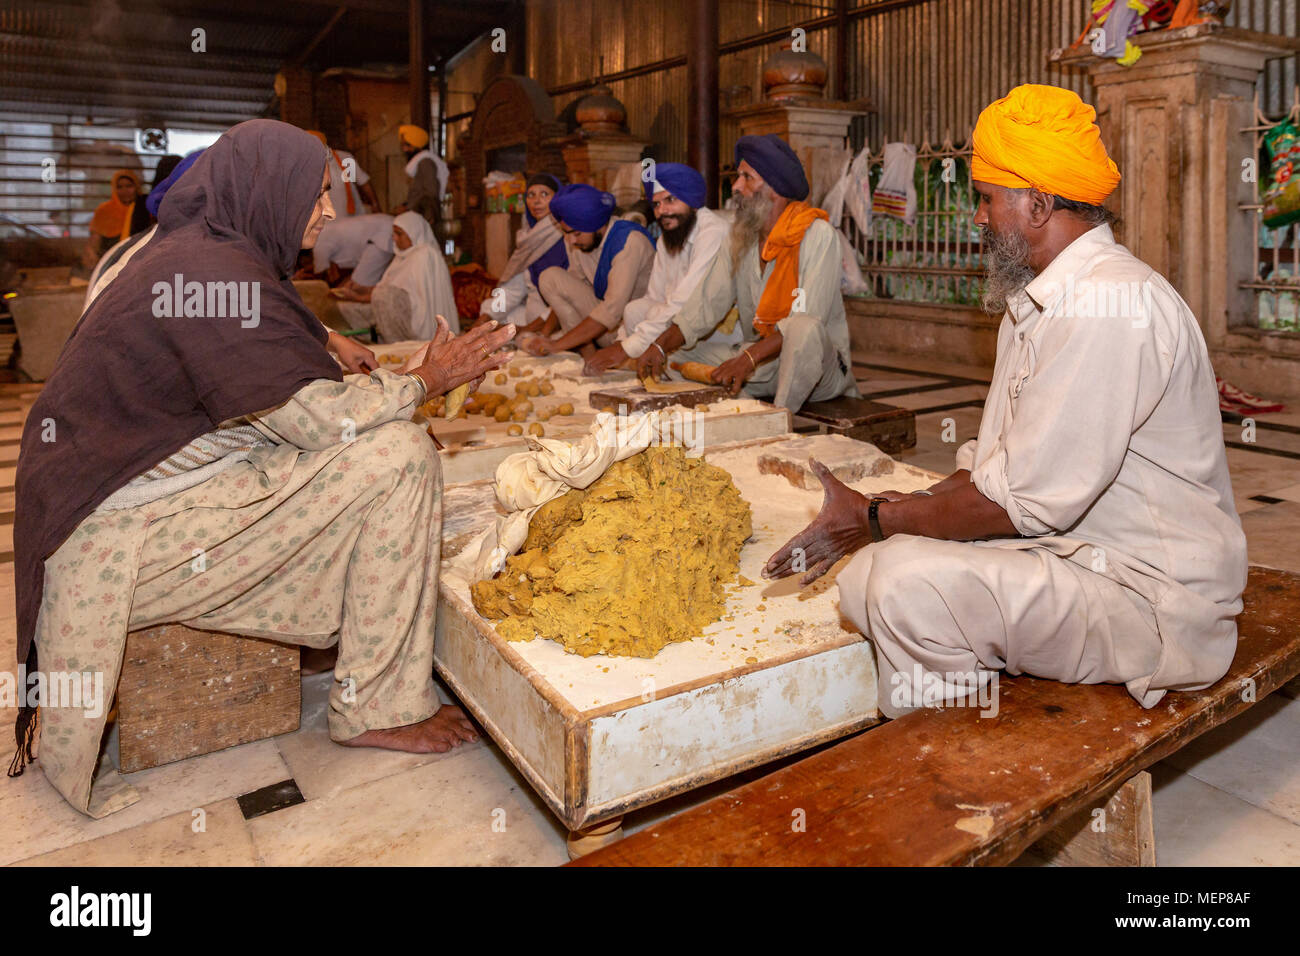 People working in the community kitchen, The Golden Temple (Harmandir Sahib), Punjab, India Stock Photo